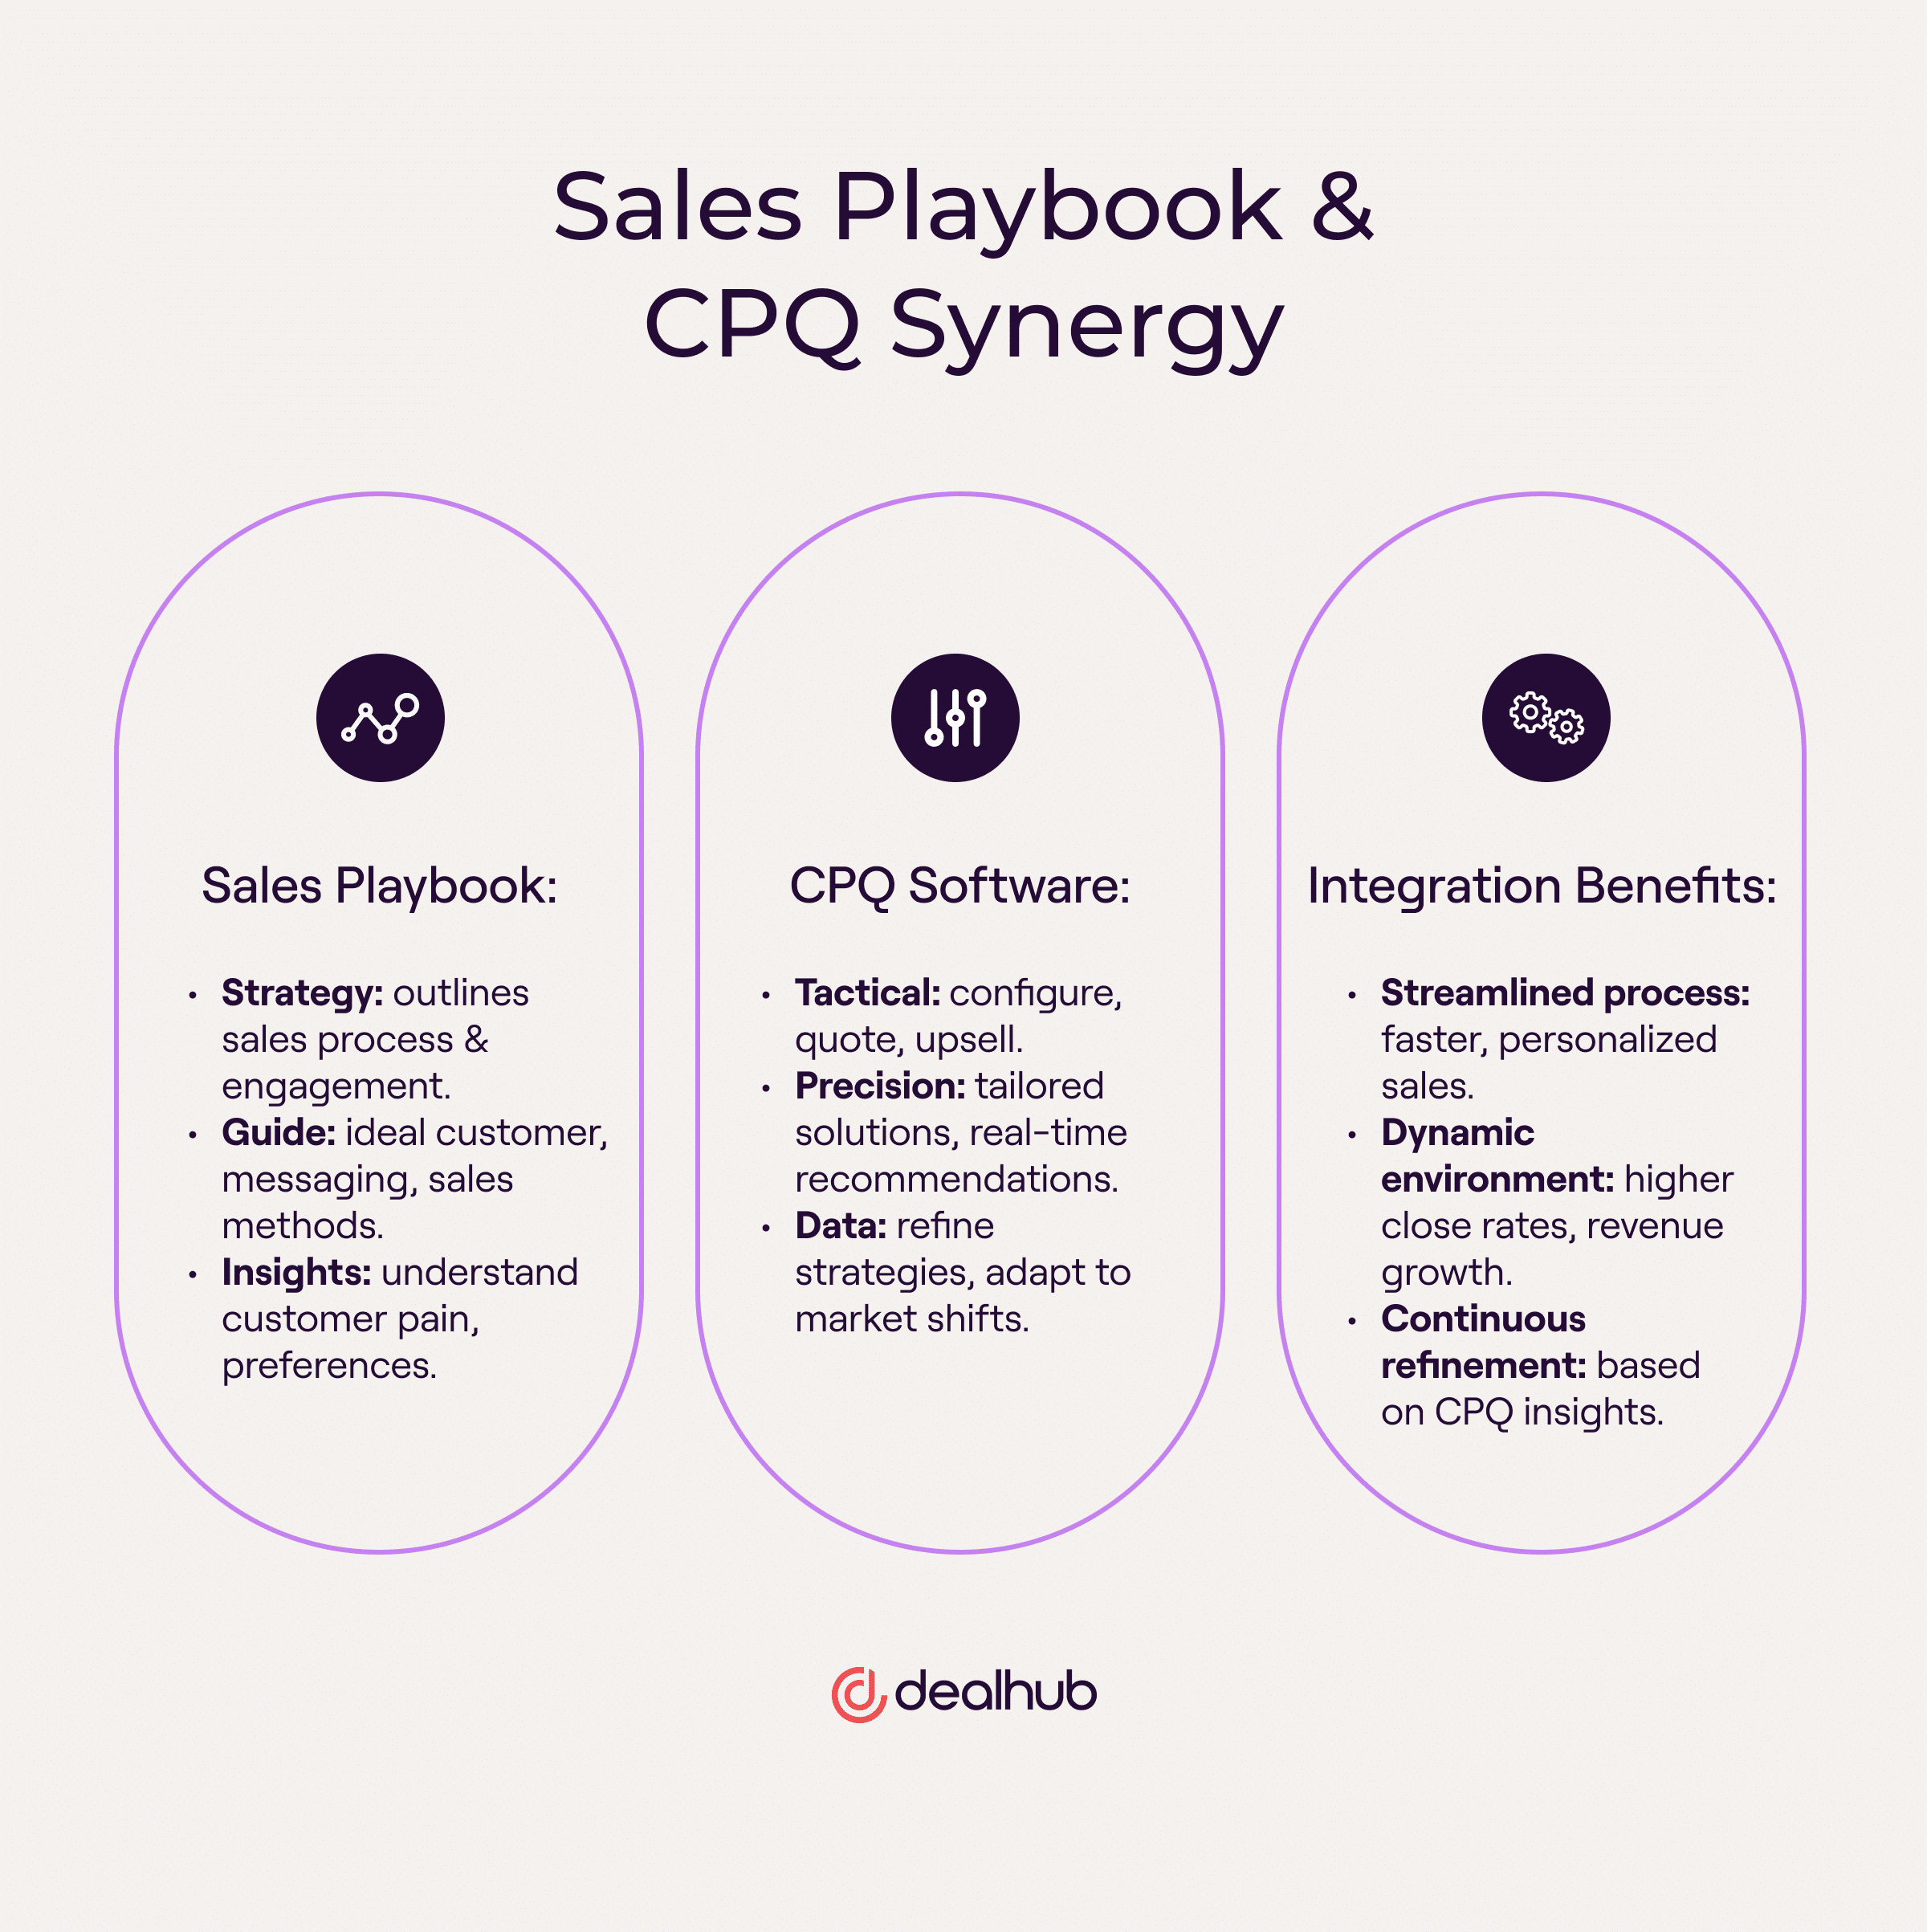 Sales playbook & CPQ synergy